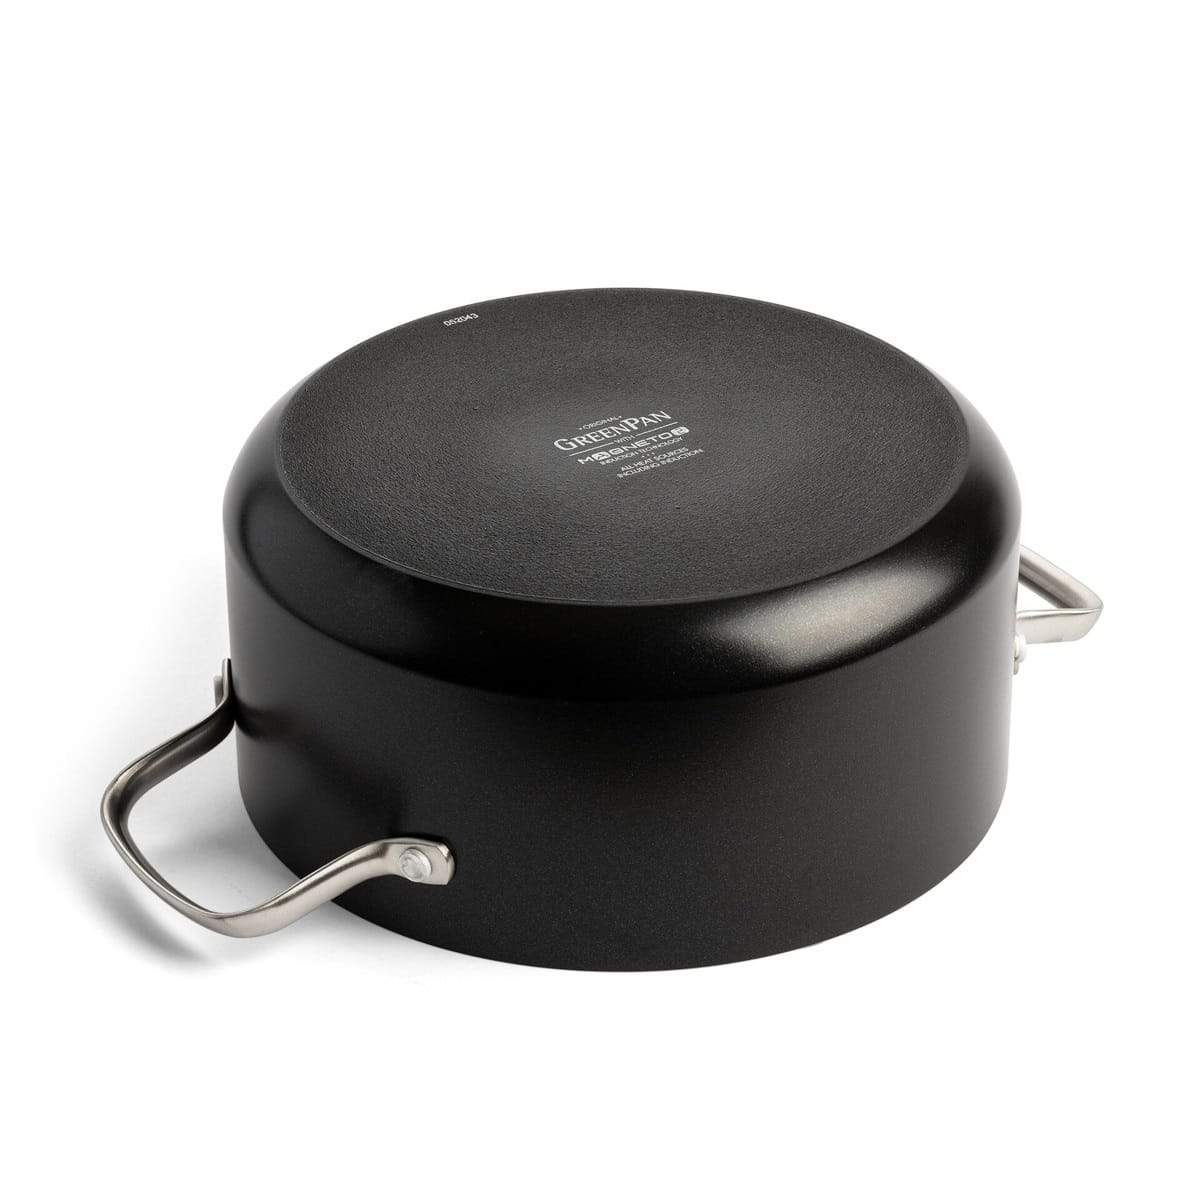 CC003346-001 - Copenhagen Stock Pot with Lid, Black - 24cm - Product Image 4